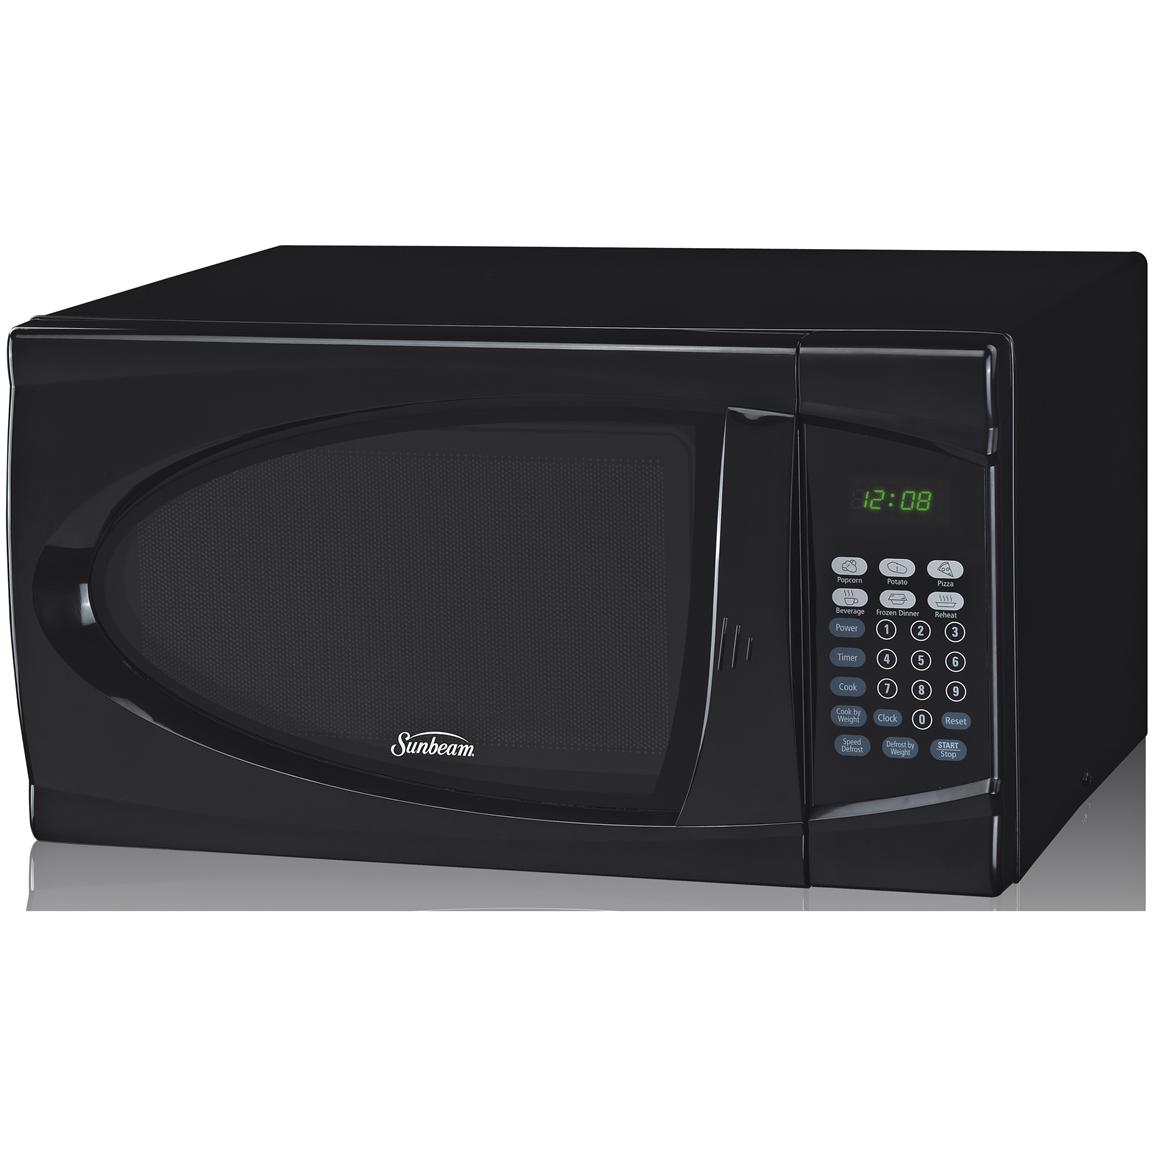 Sunbeam® 1.1 cu. ft. Digital Microwave Oven - 297401, Kitchen